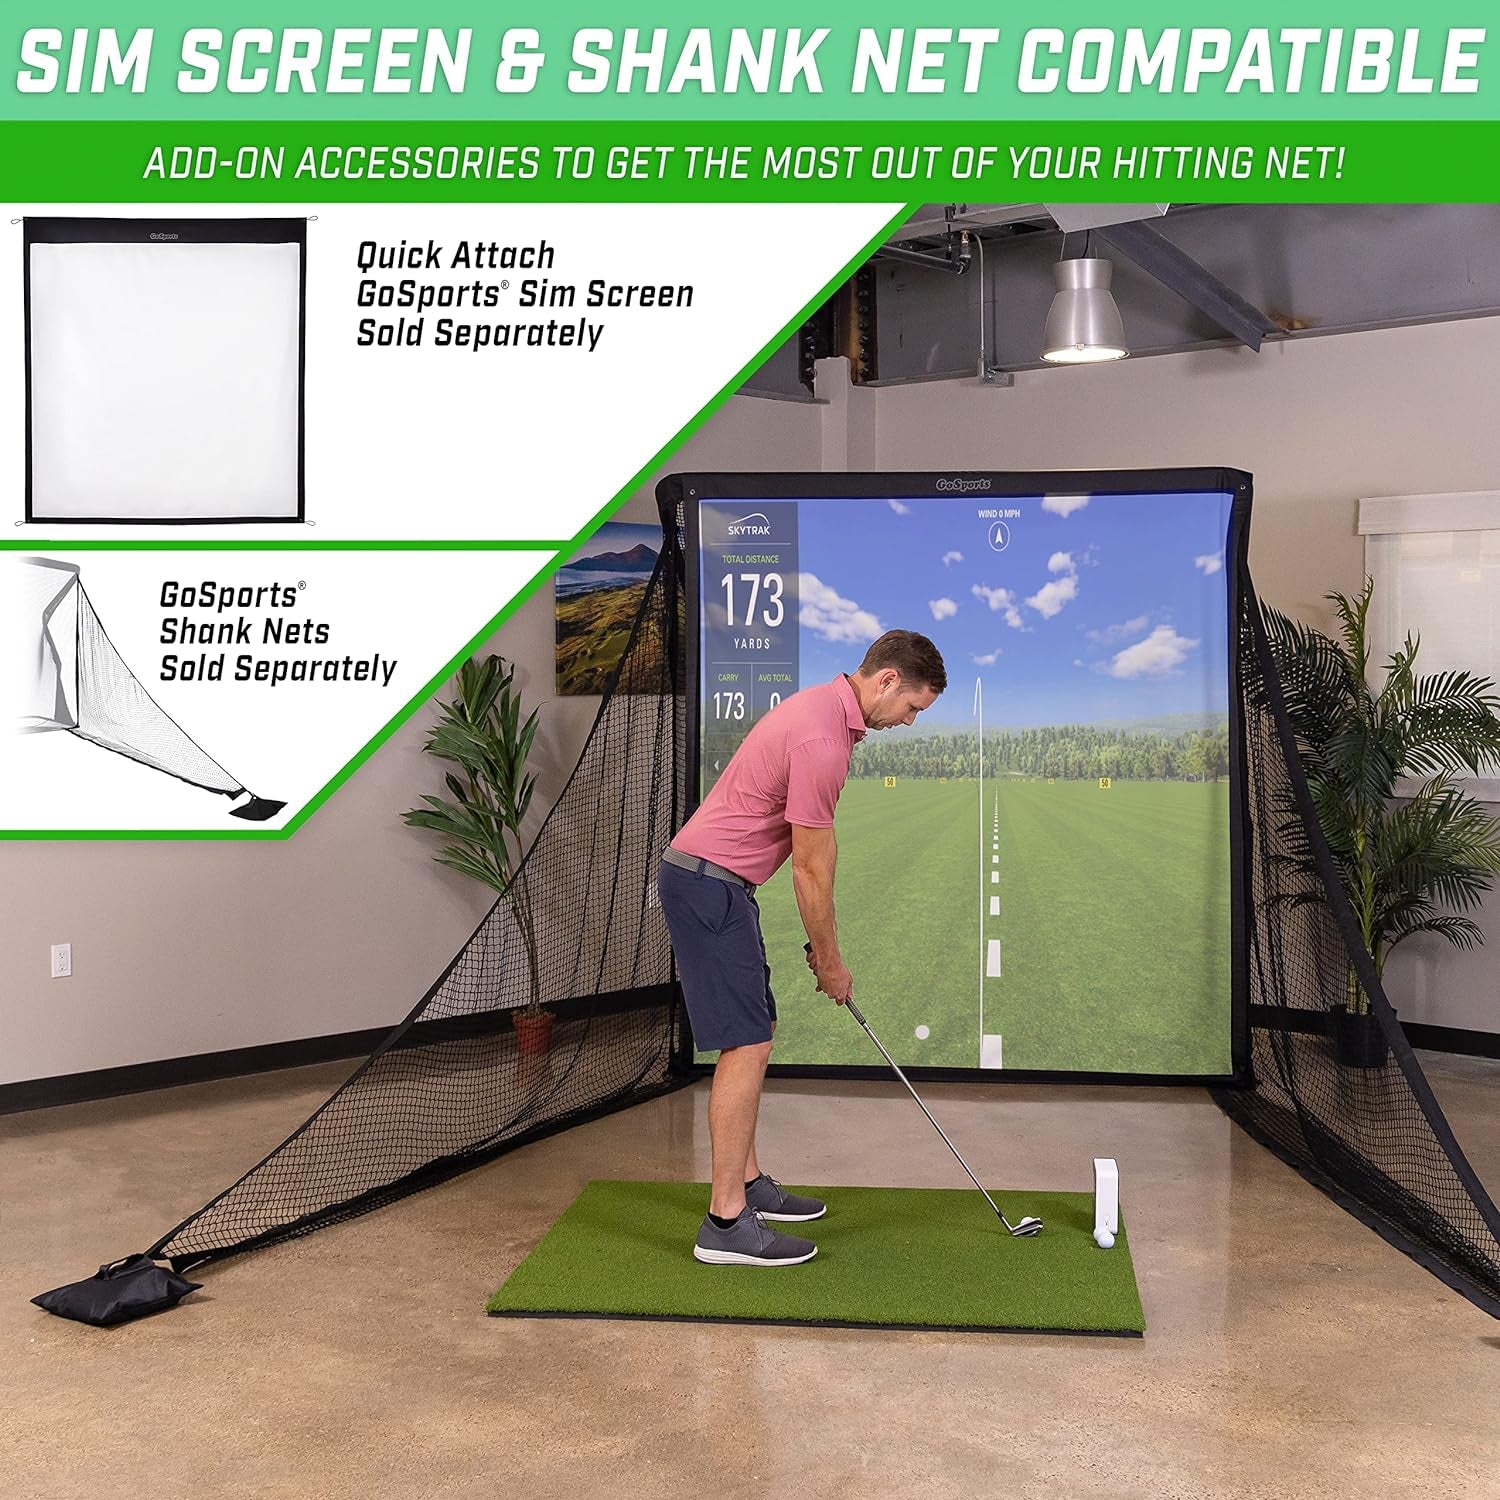 Elite Golf Practice Net with Steel Frame - Choose 10' or 7' Size